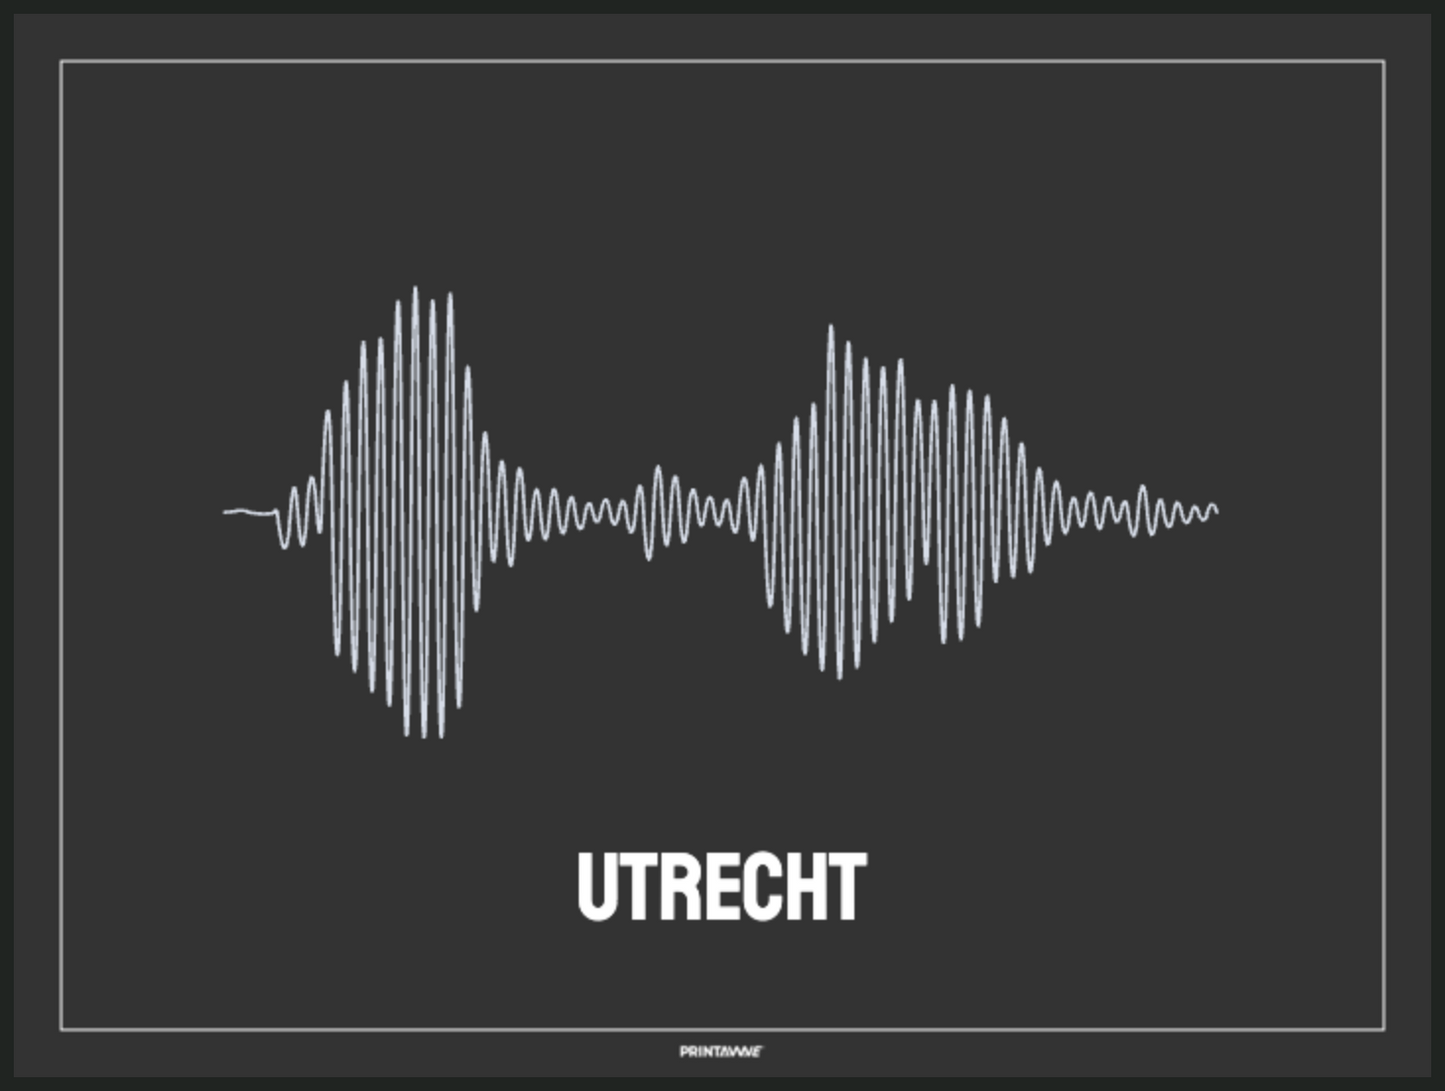 Curved Soundwave 'Utrecht' Poster - White Soundwave on Anthracite Background